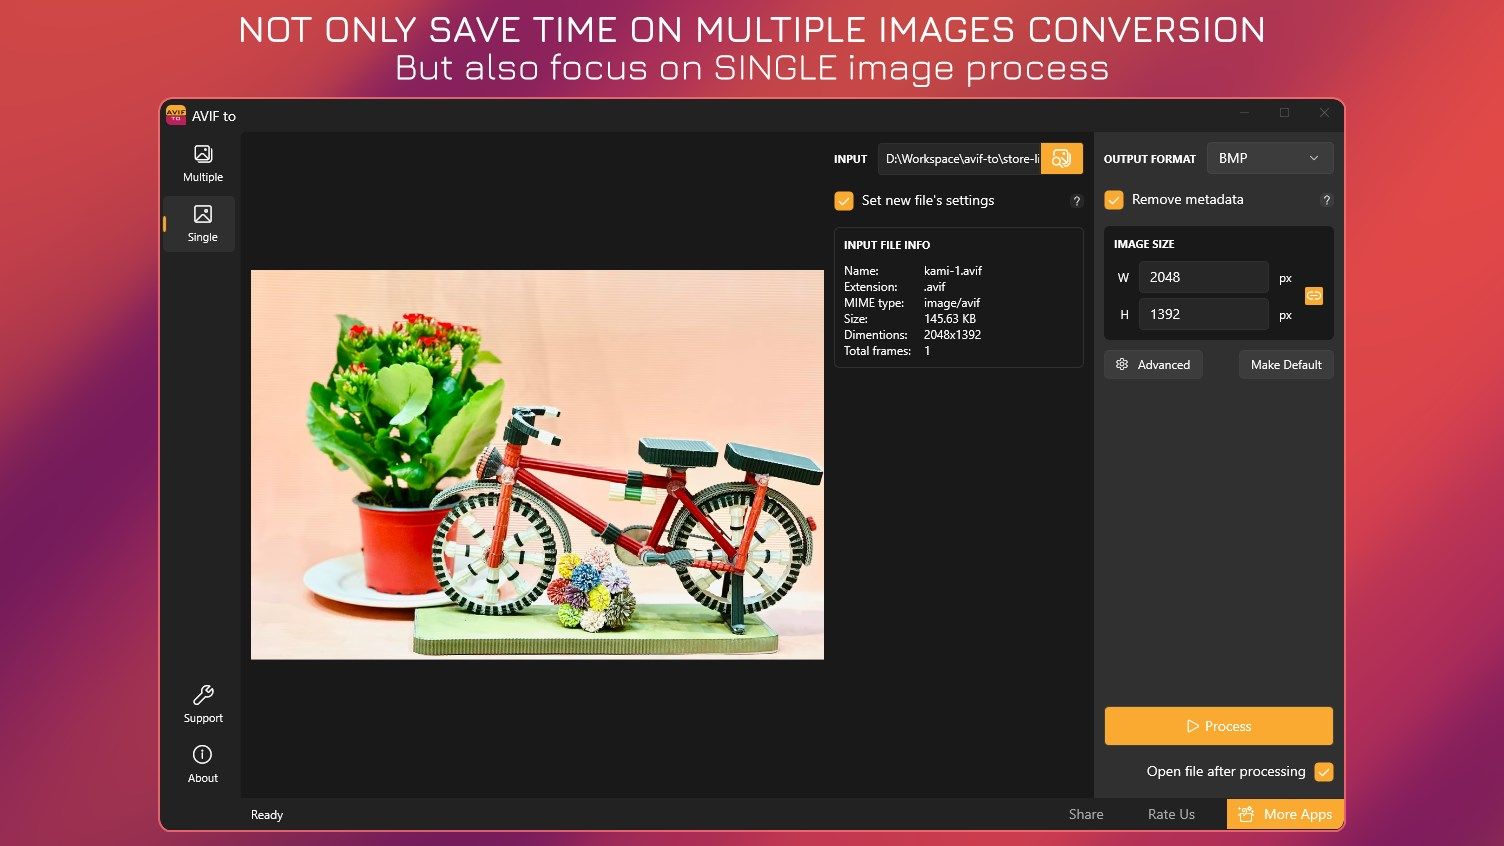 AVIF to - Image Converter